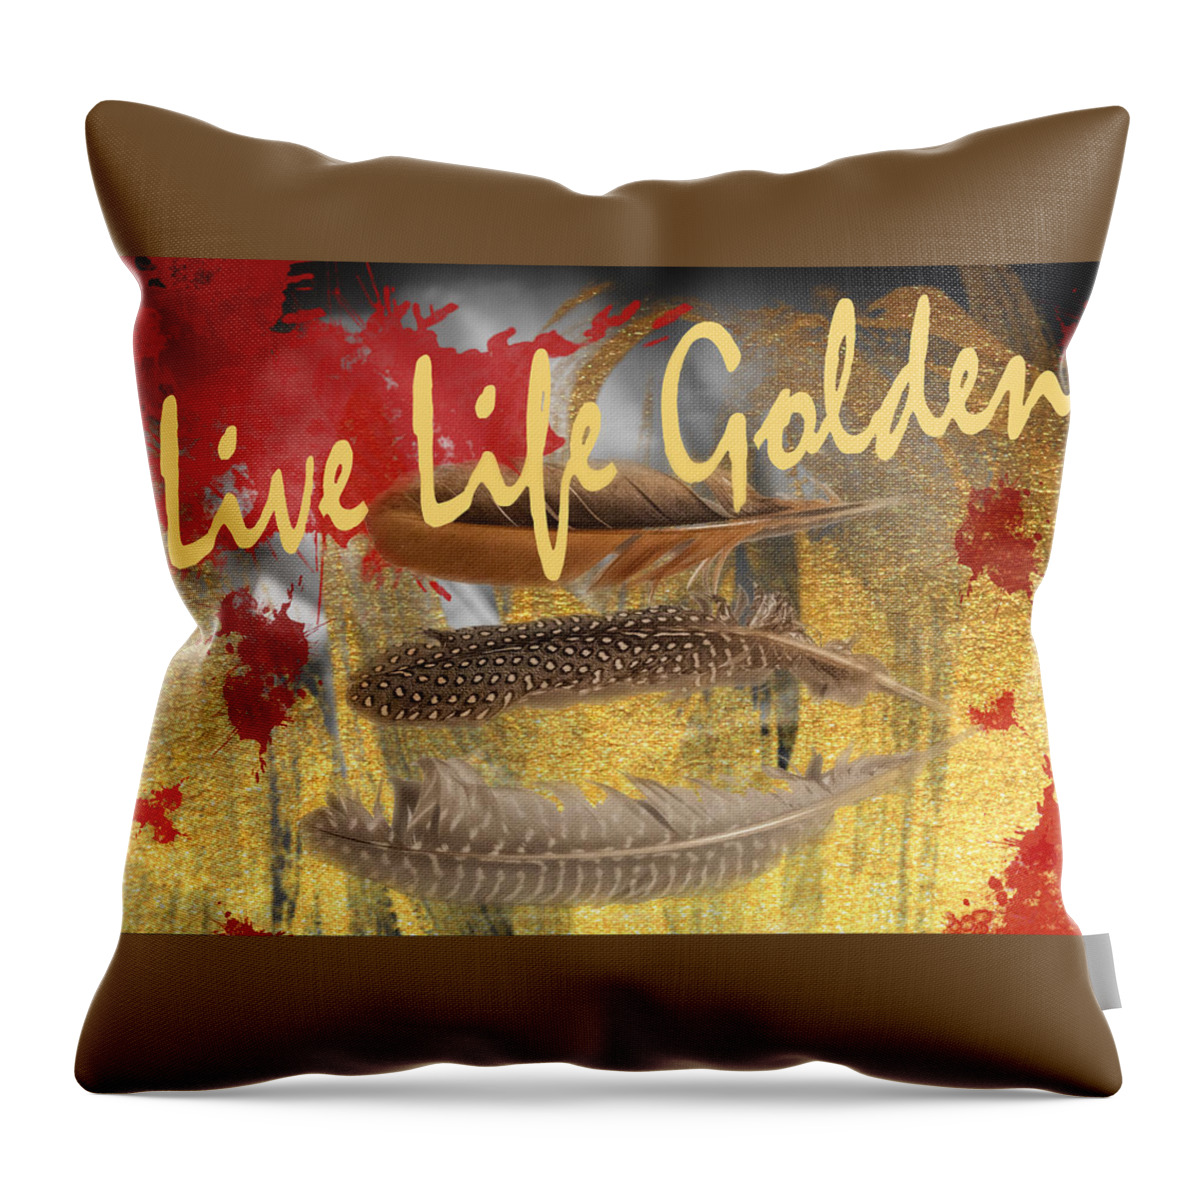 Golden Throw Pillow featuring the photograph Live Life Golden by Toni Hopper